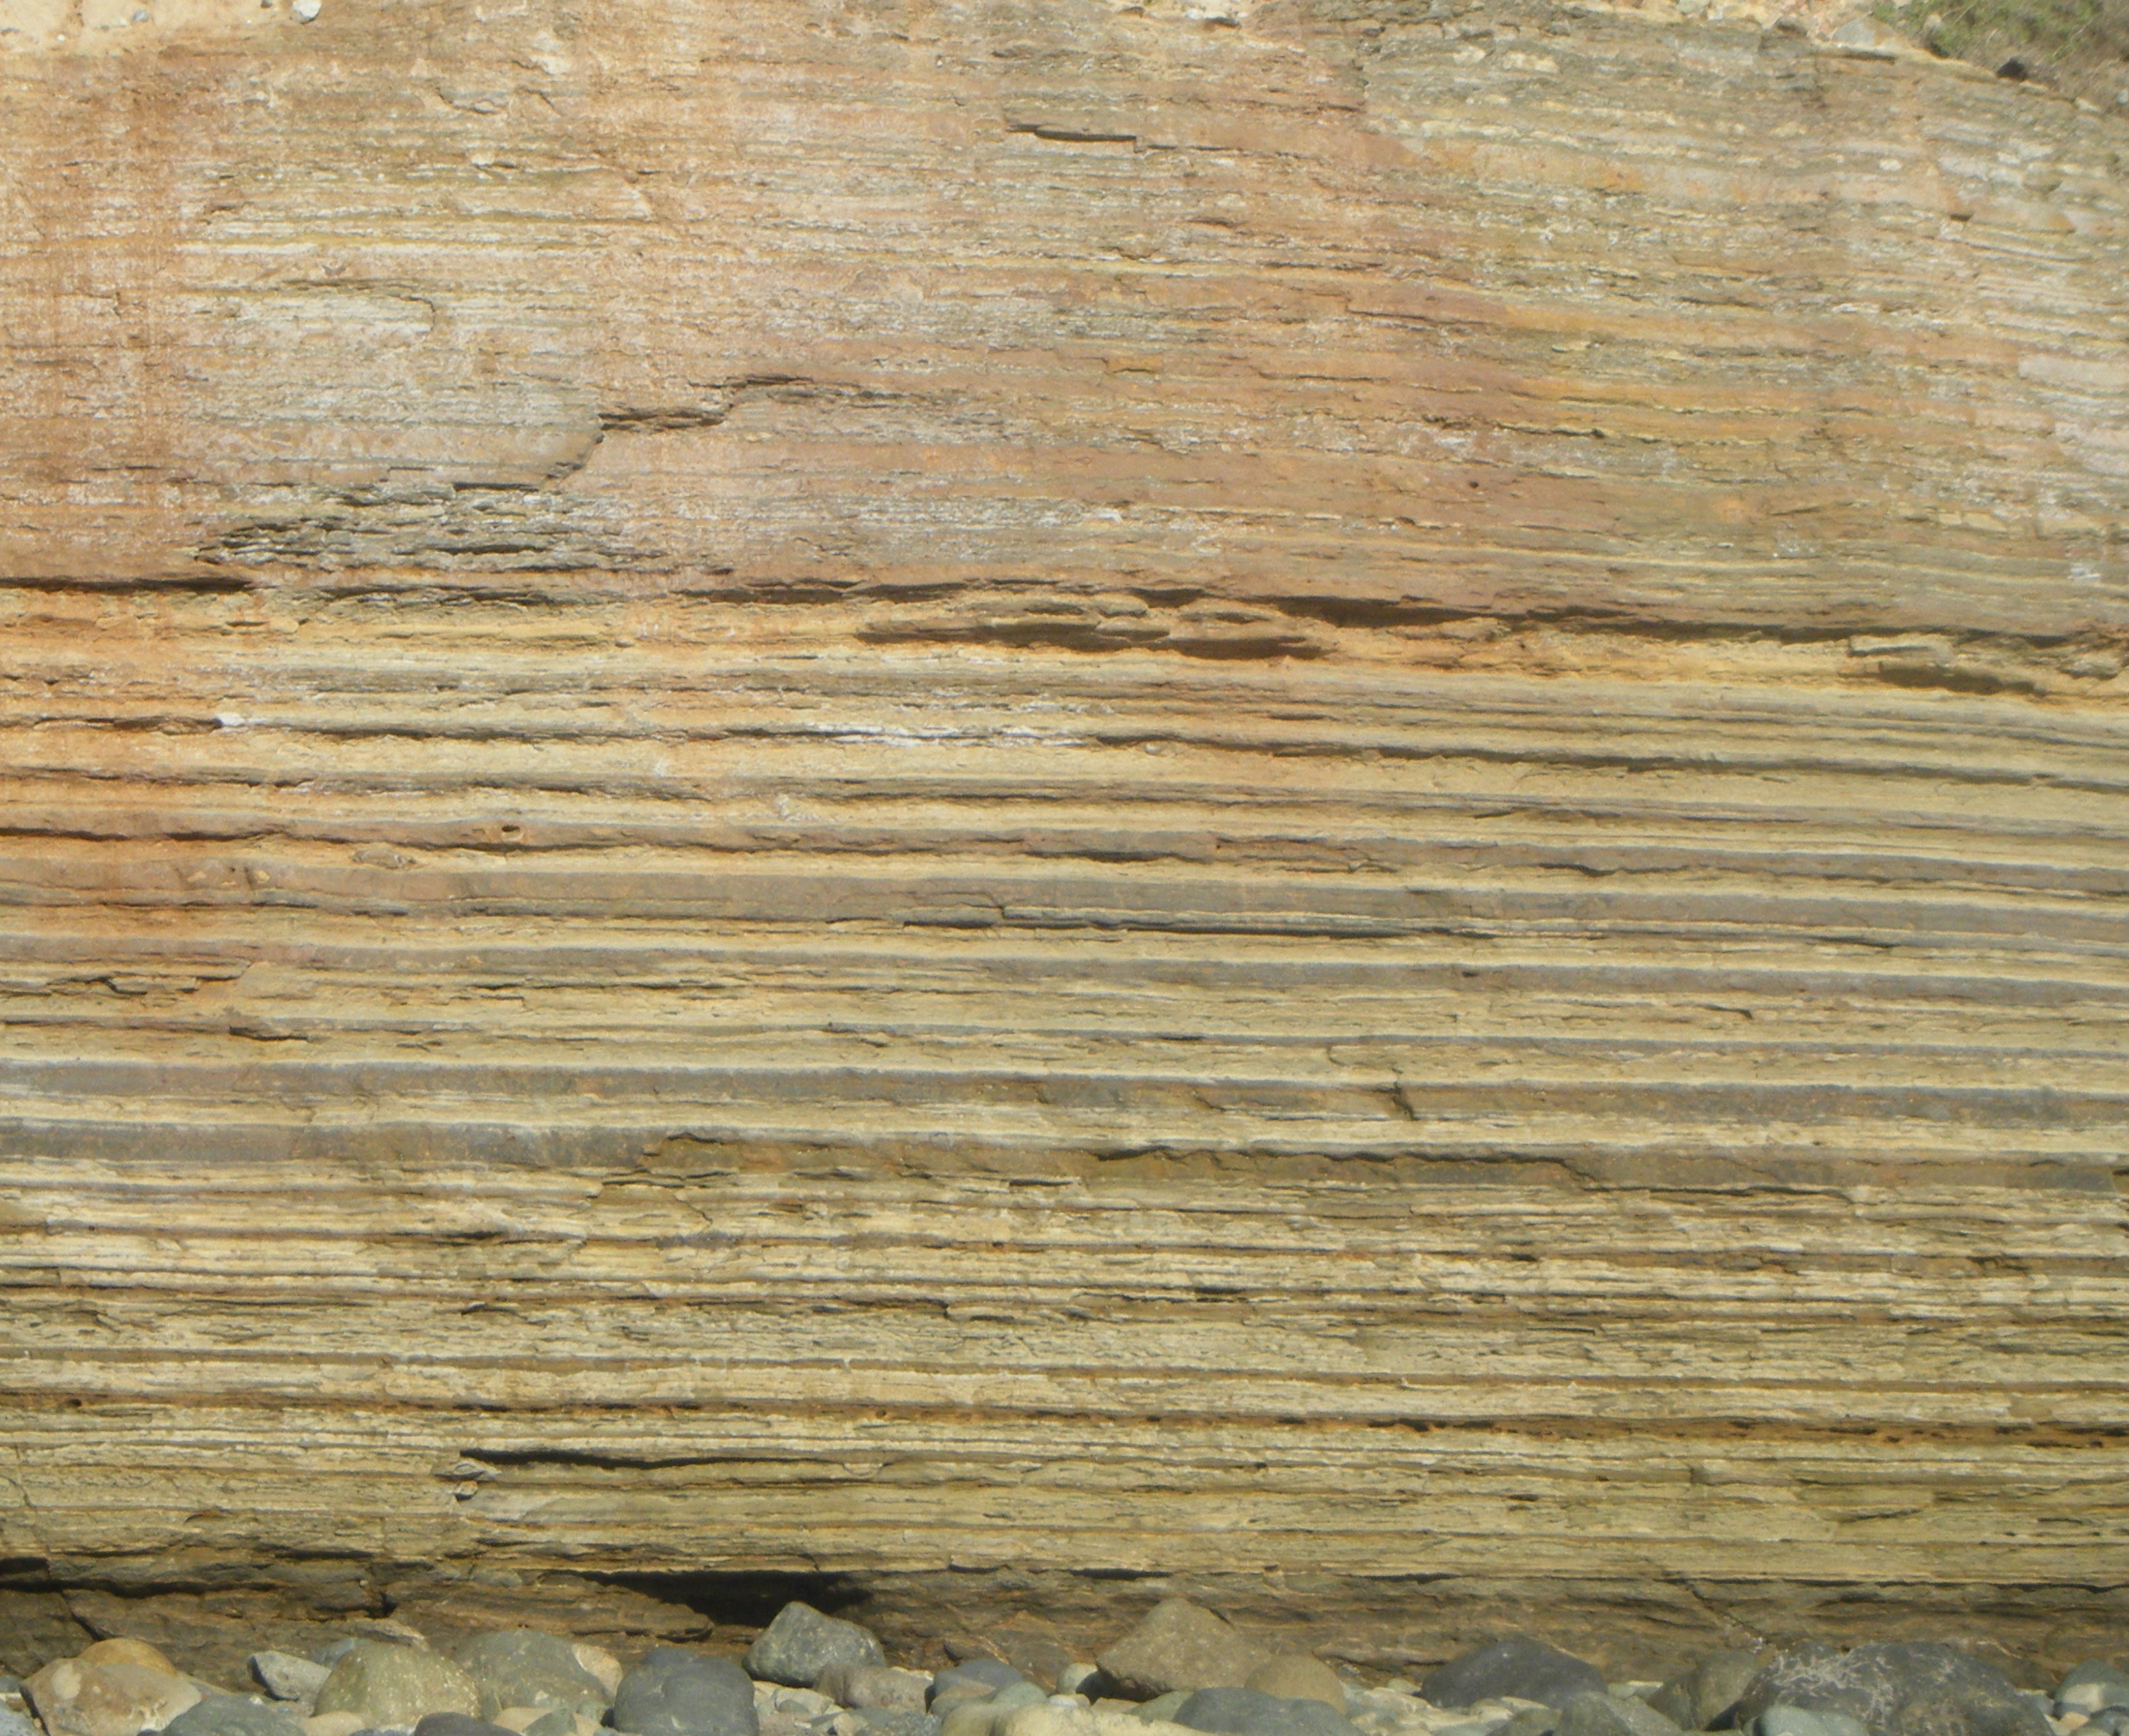 Sedimentary rock layers close up